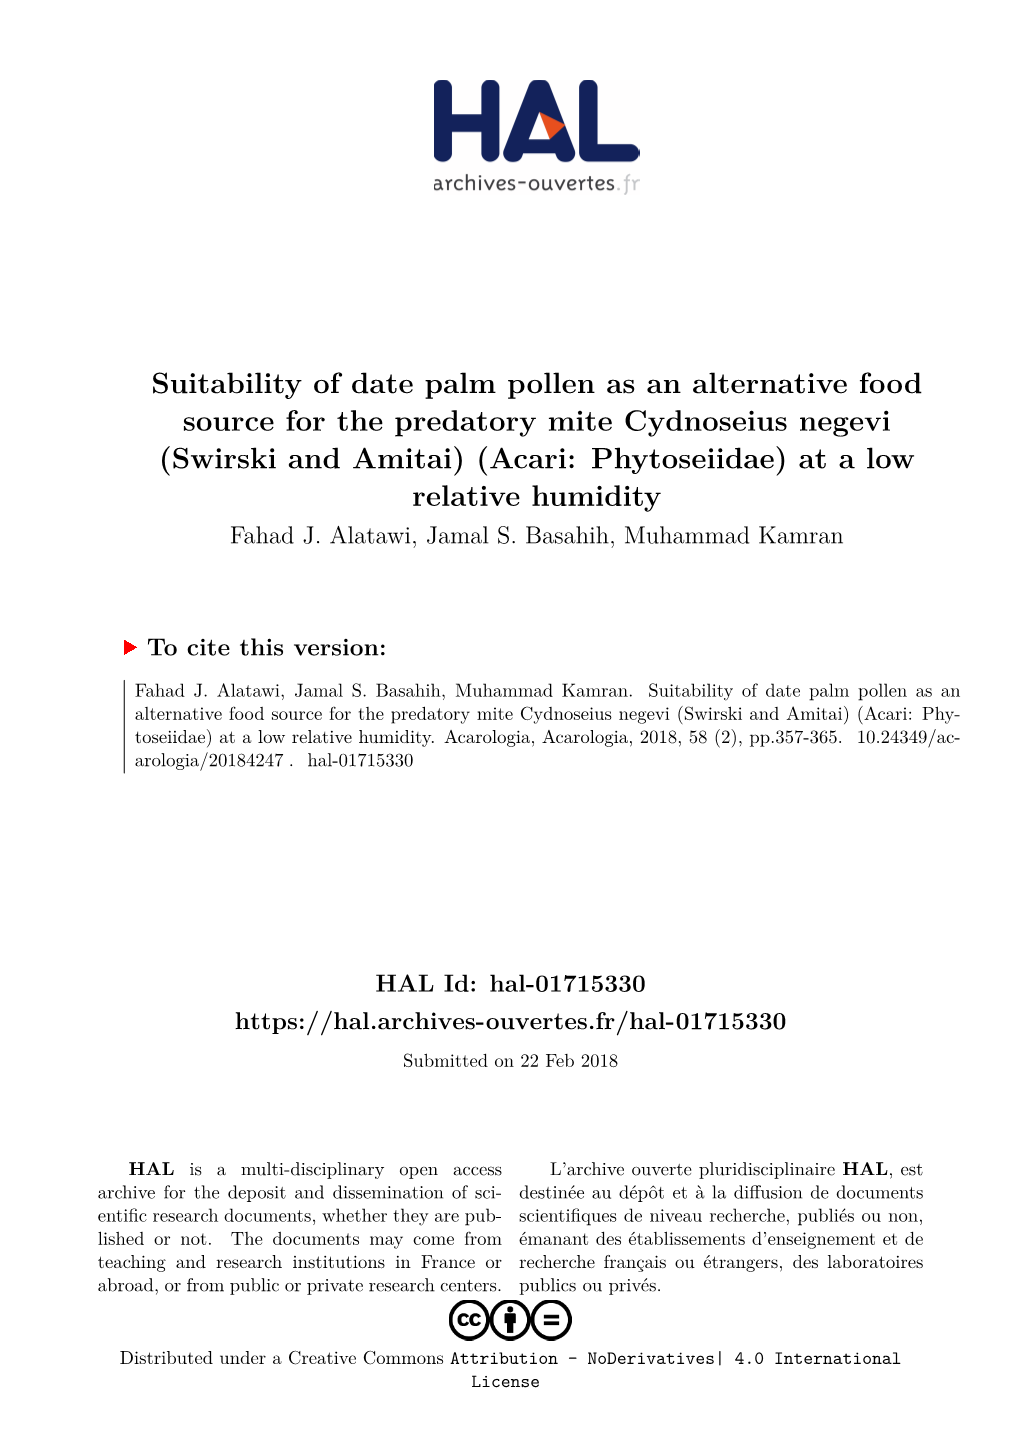 Suitability of Date Palm Pollen As an Alternative